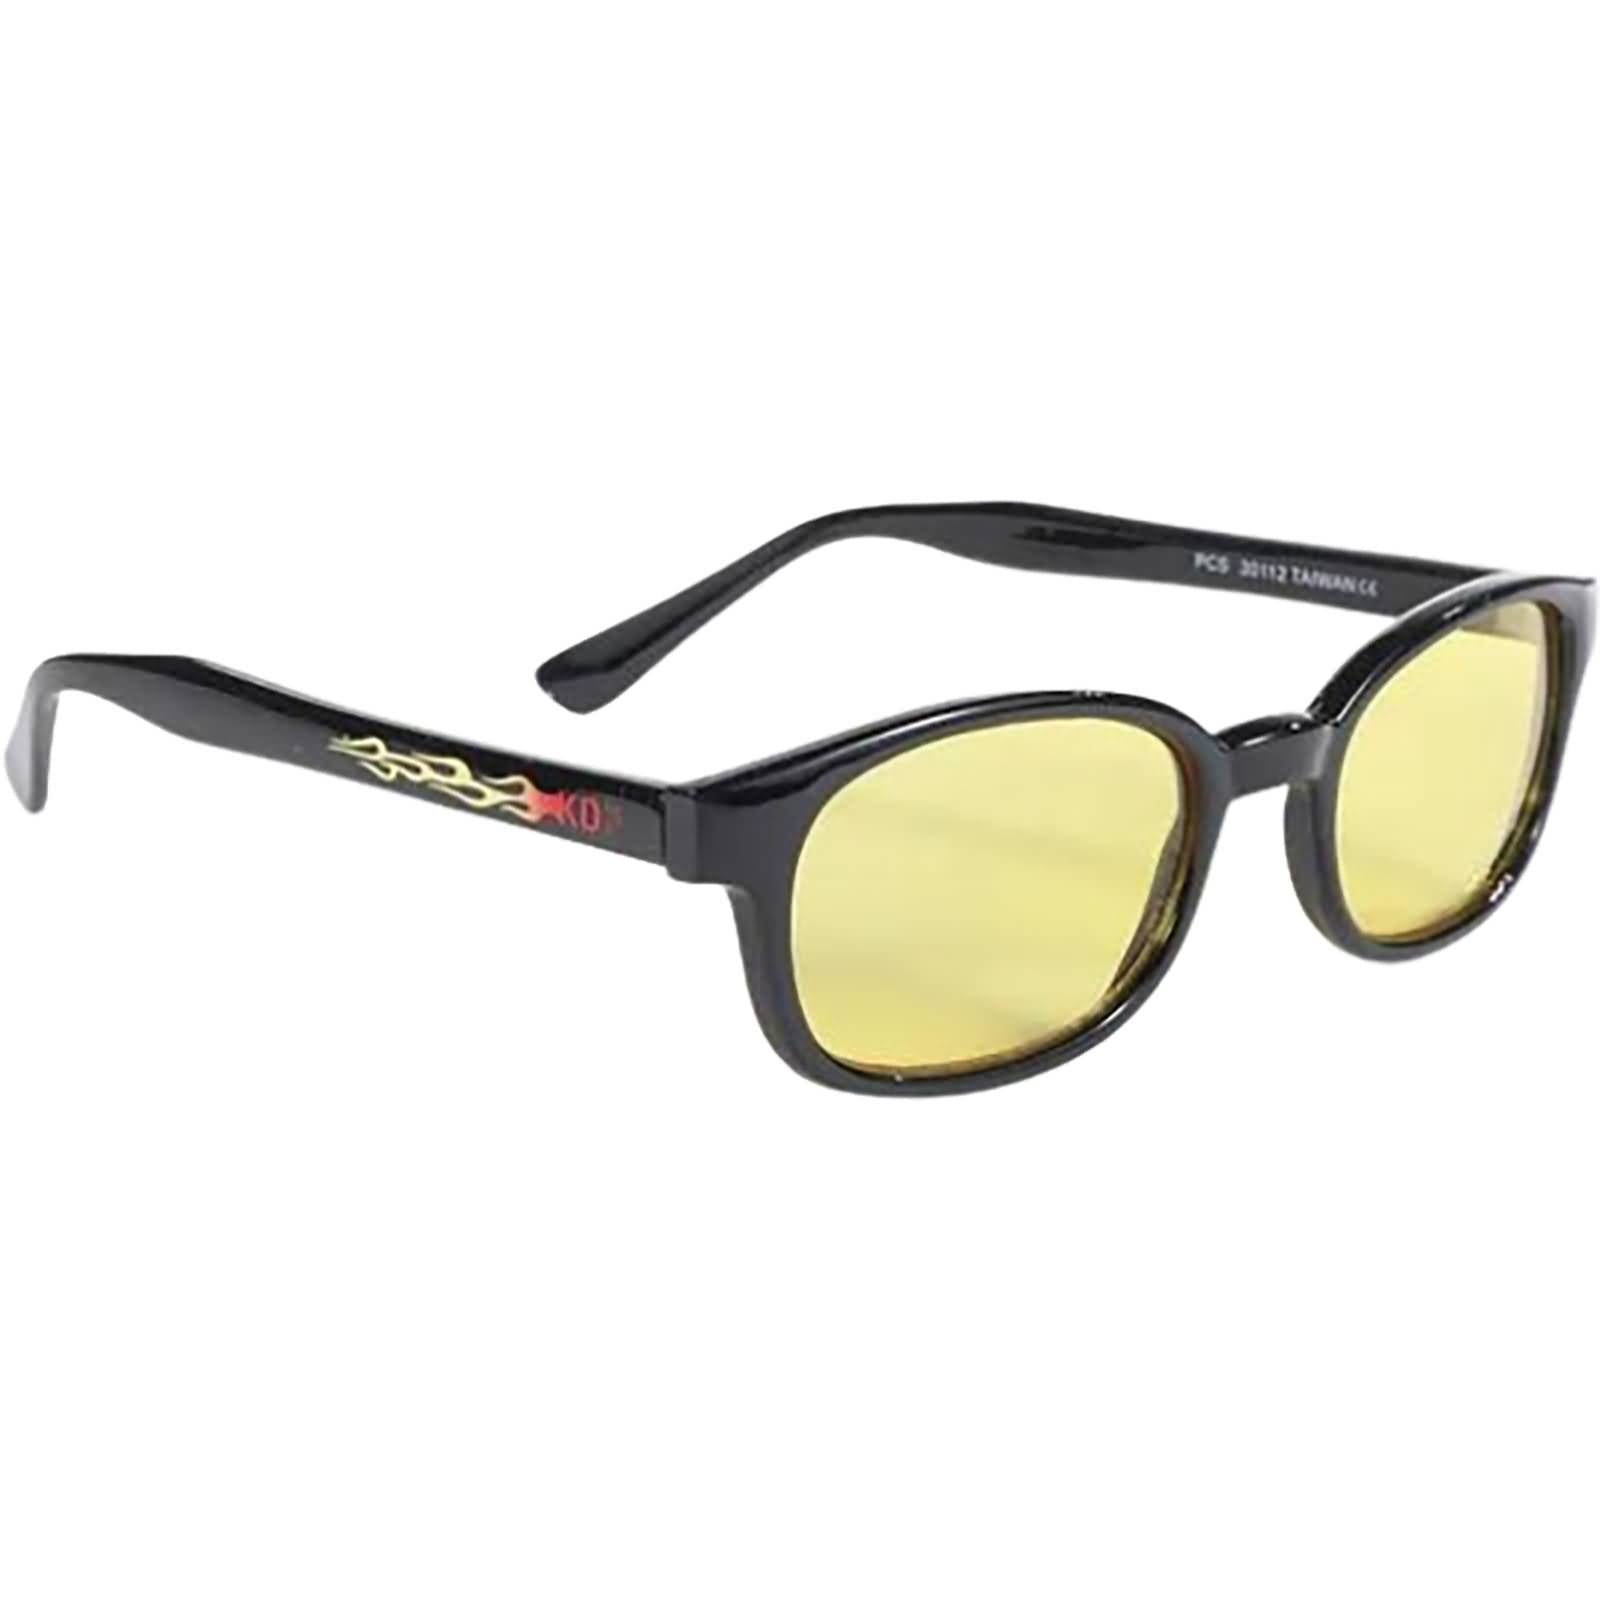 KD Original Flame Adult Lifestyle Sunglasses-15-6001